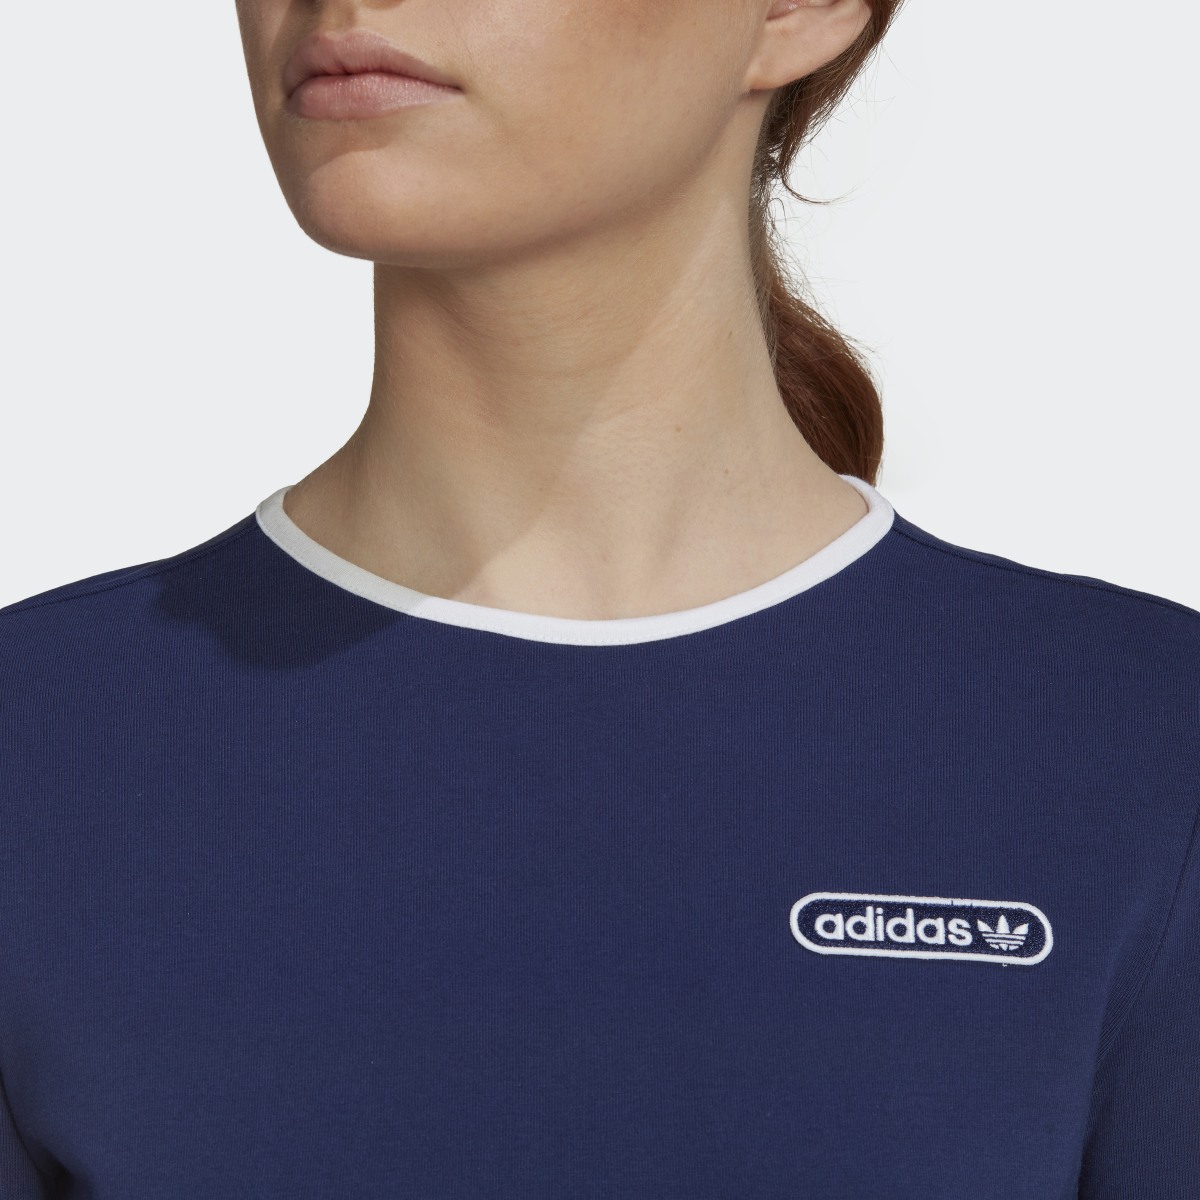 Adidas Crop T-Shirt with Binding Details. 7